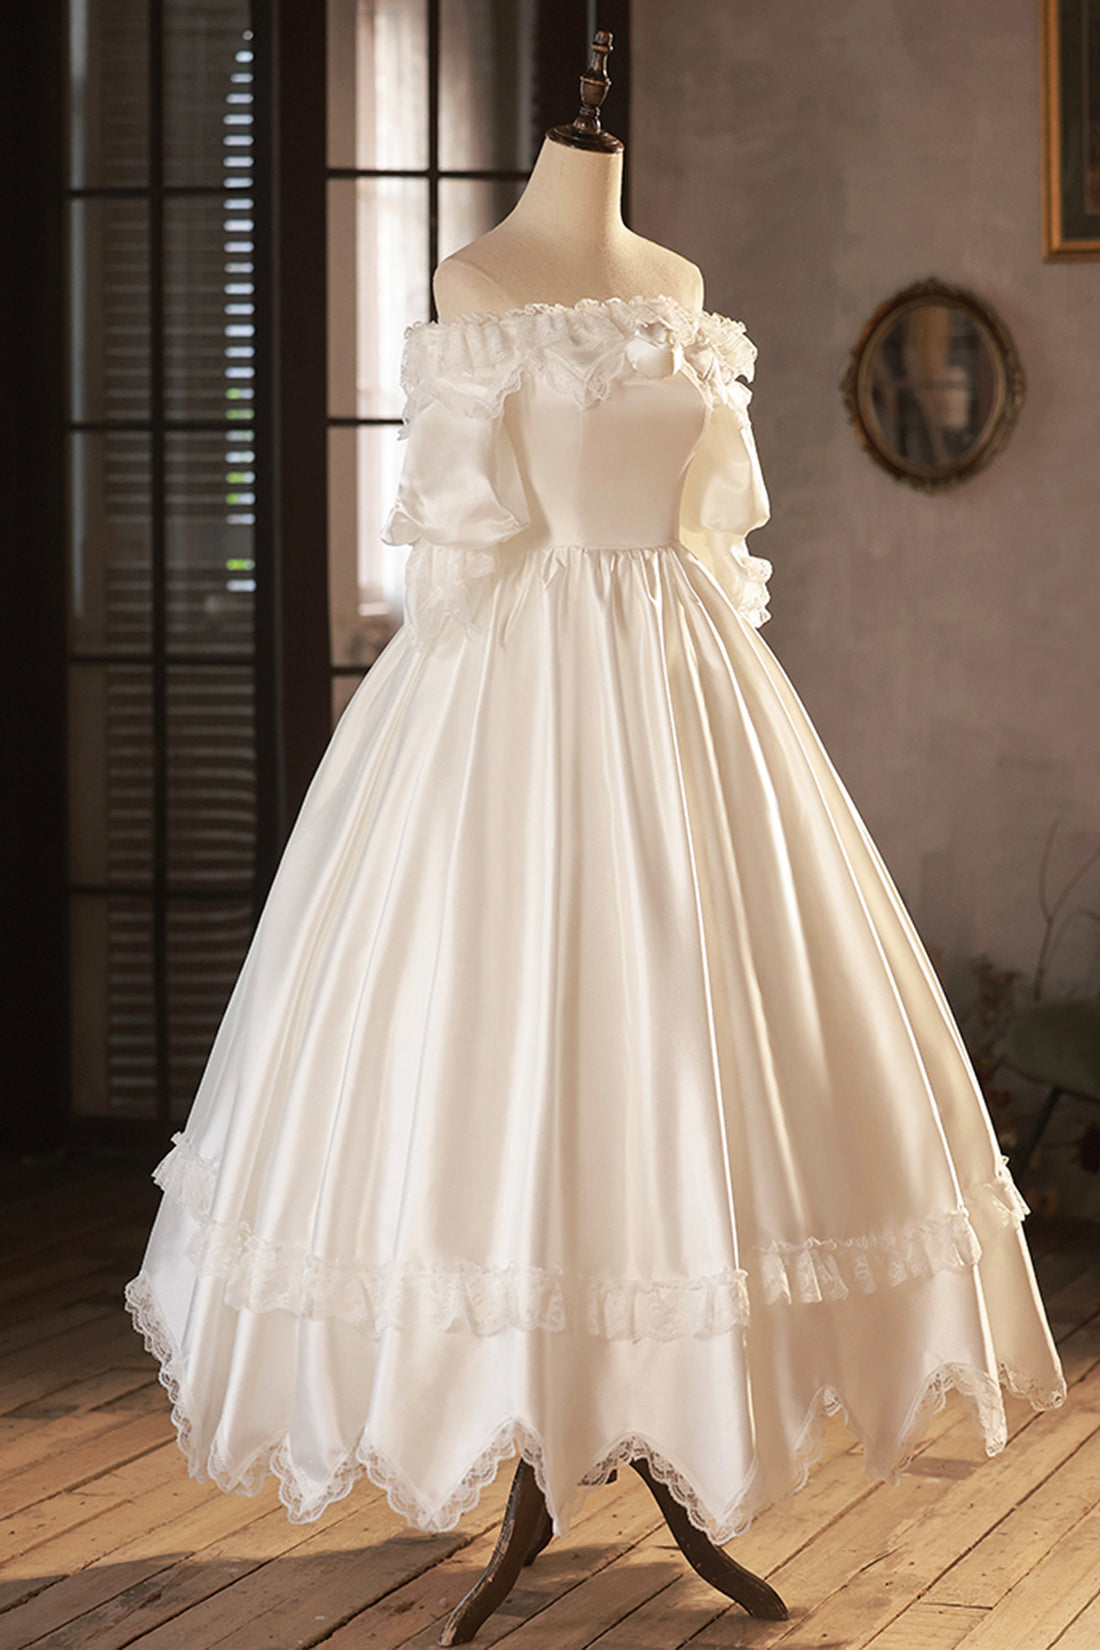 Wedding Dresses Shopping, White Satin Lace Prom Dress, White Evening Dress, Wedding Dress